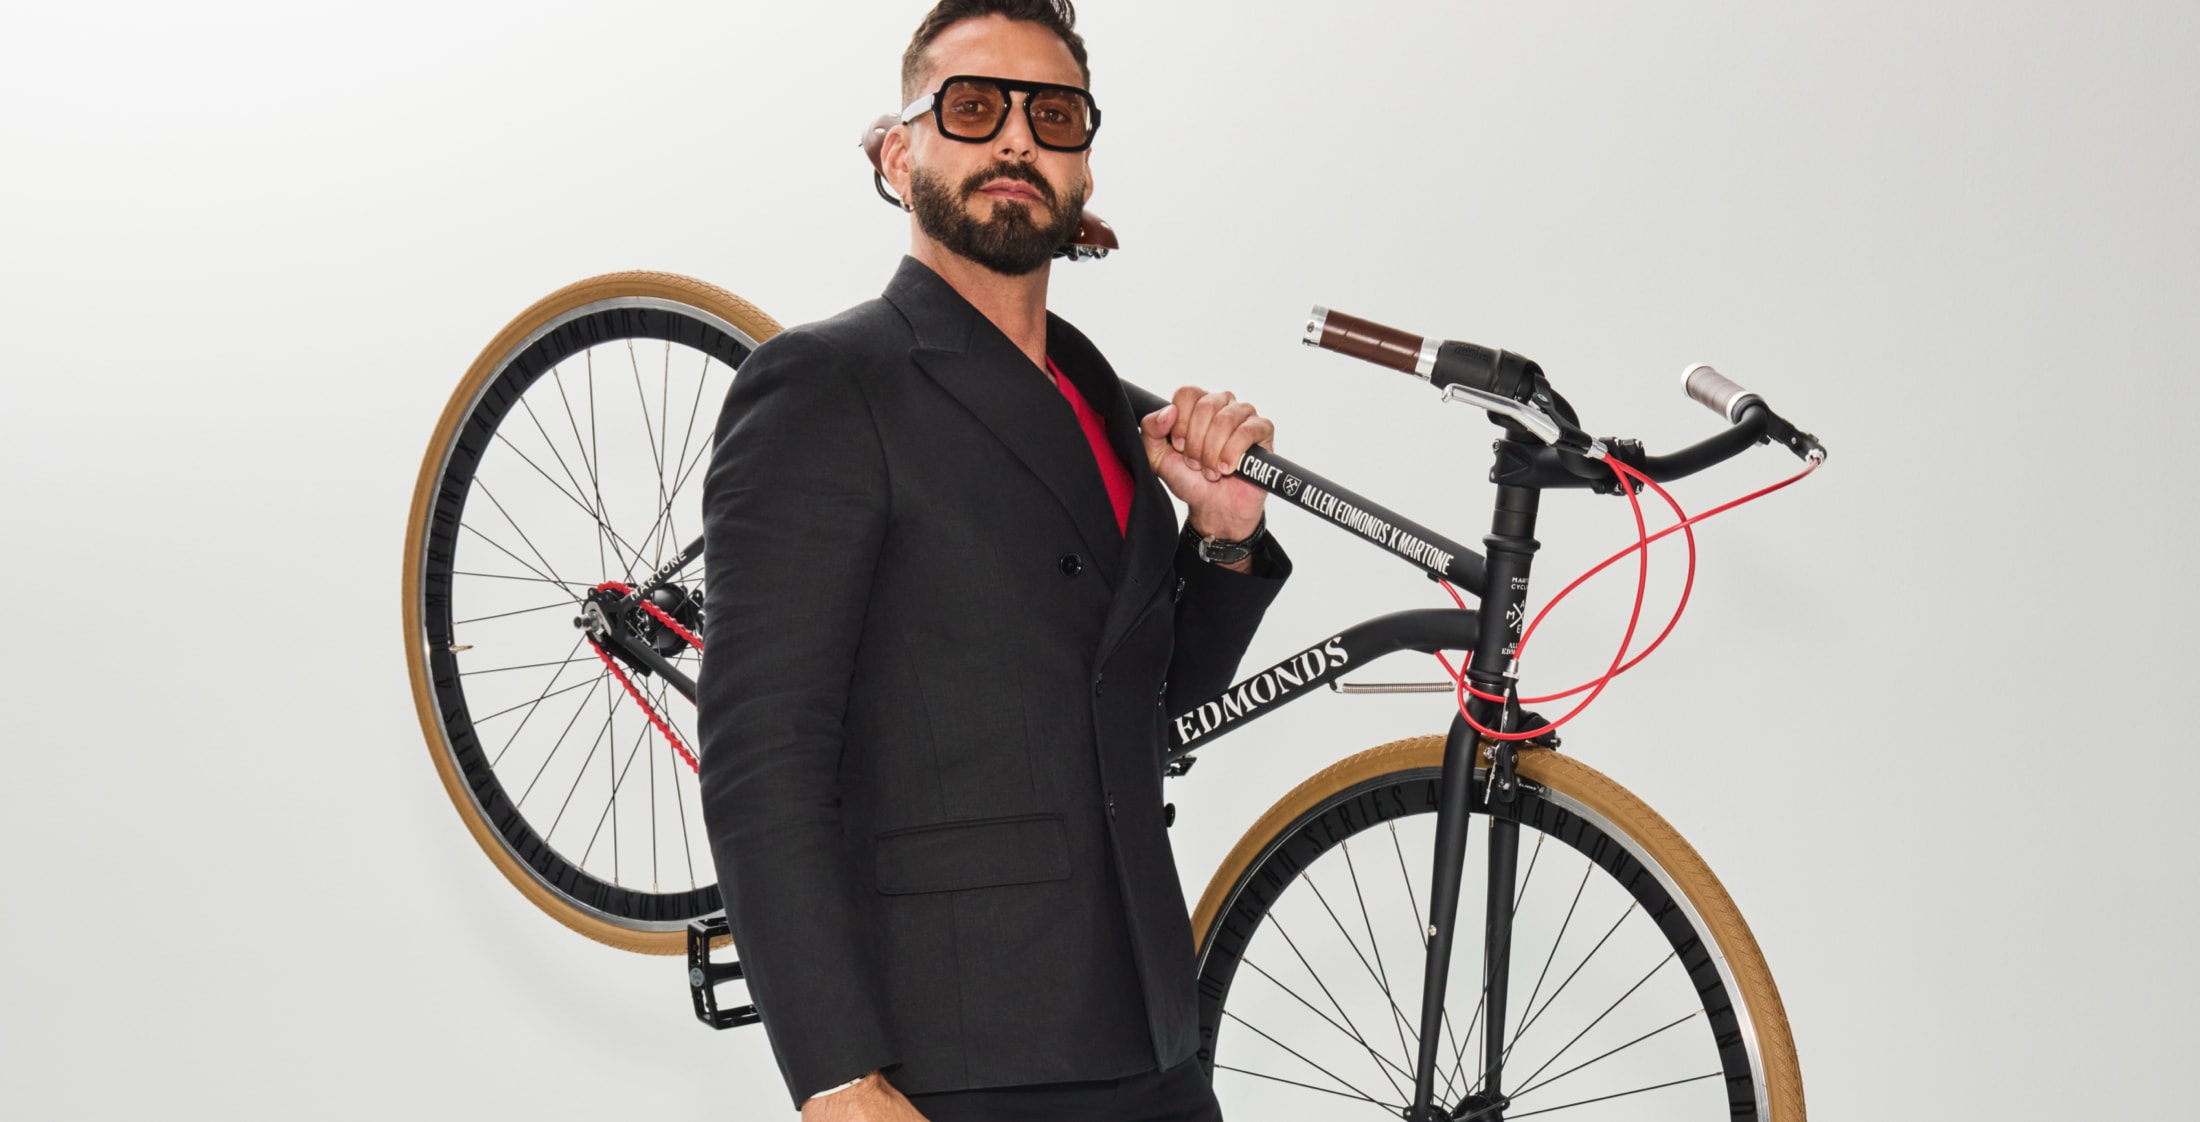 lorenzo martone holding a bicycle